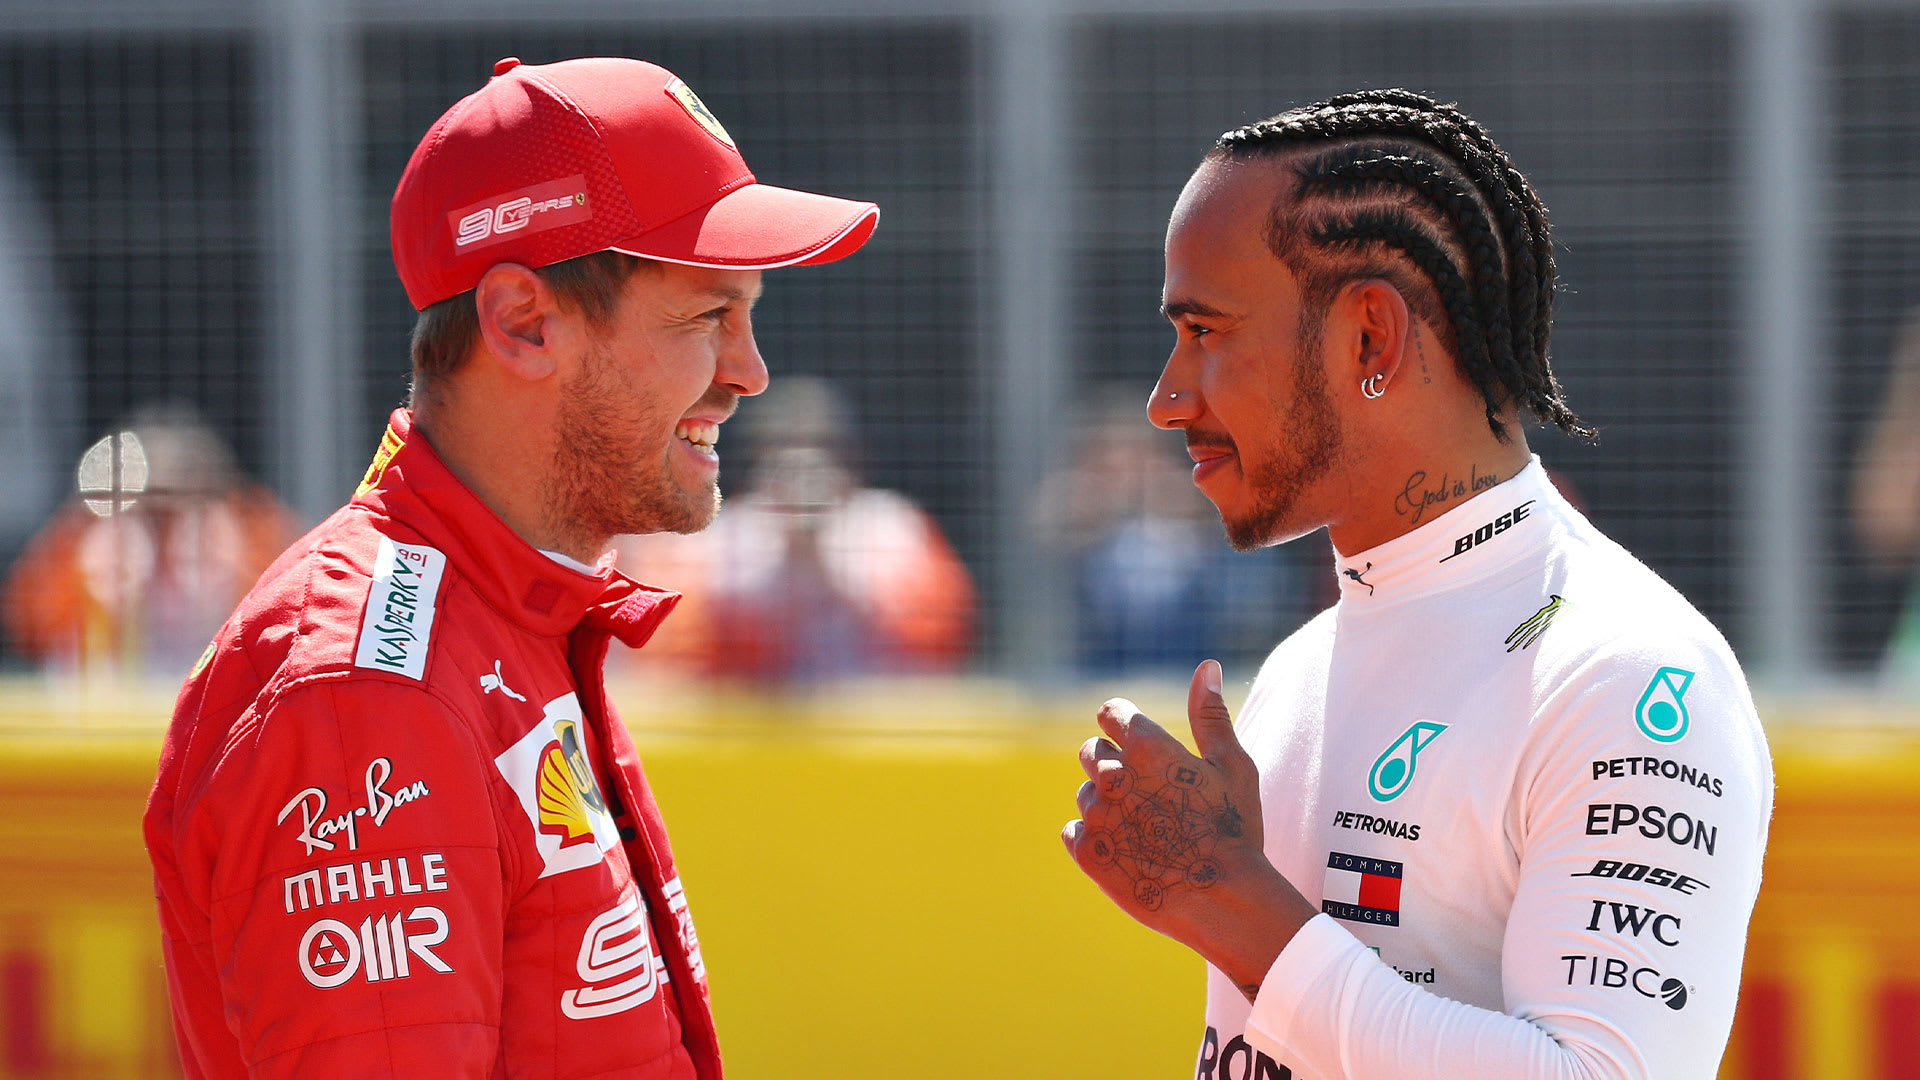 Hamilton: 'Huge amount of respect' between Vettel and I - Formula 1